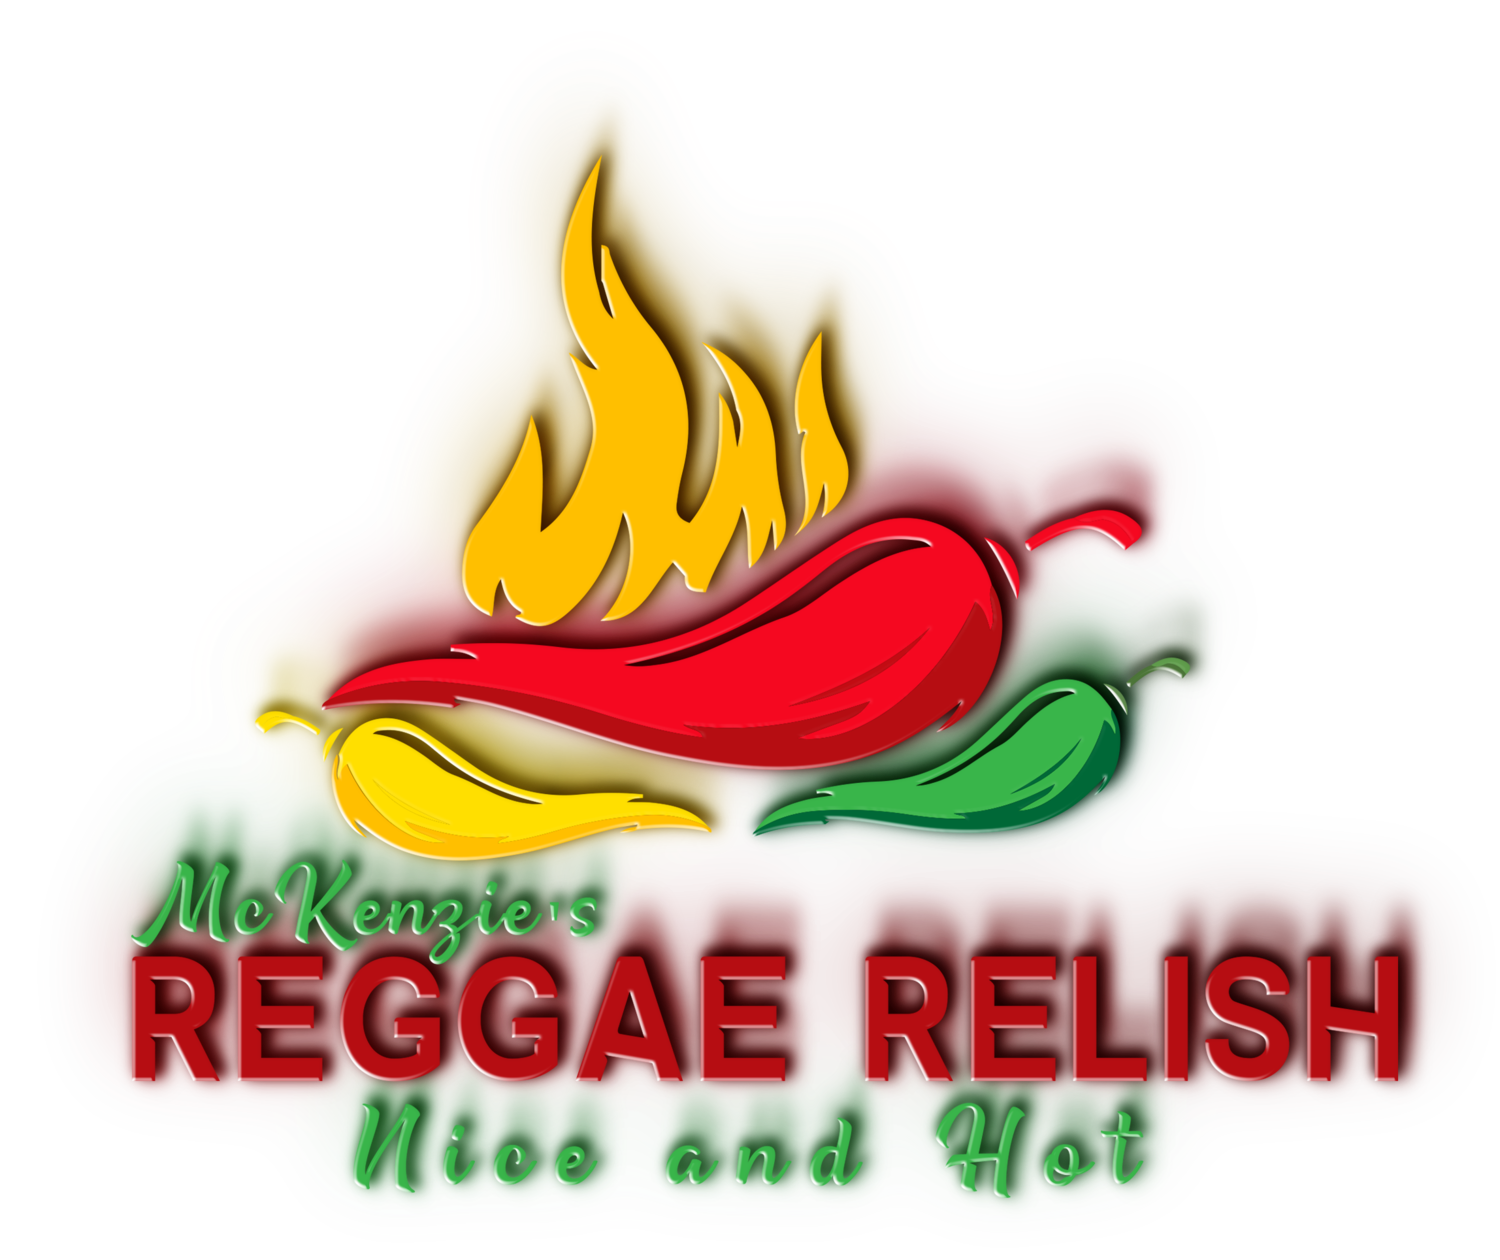 Reggae Relish